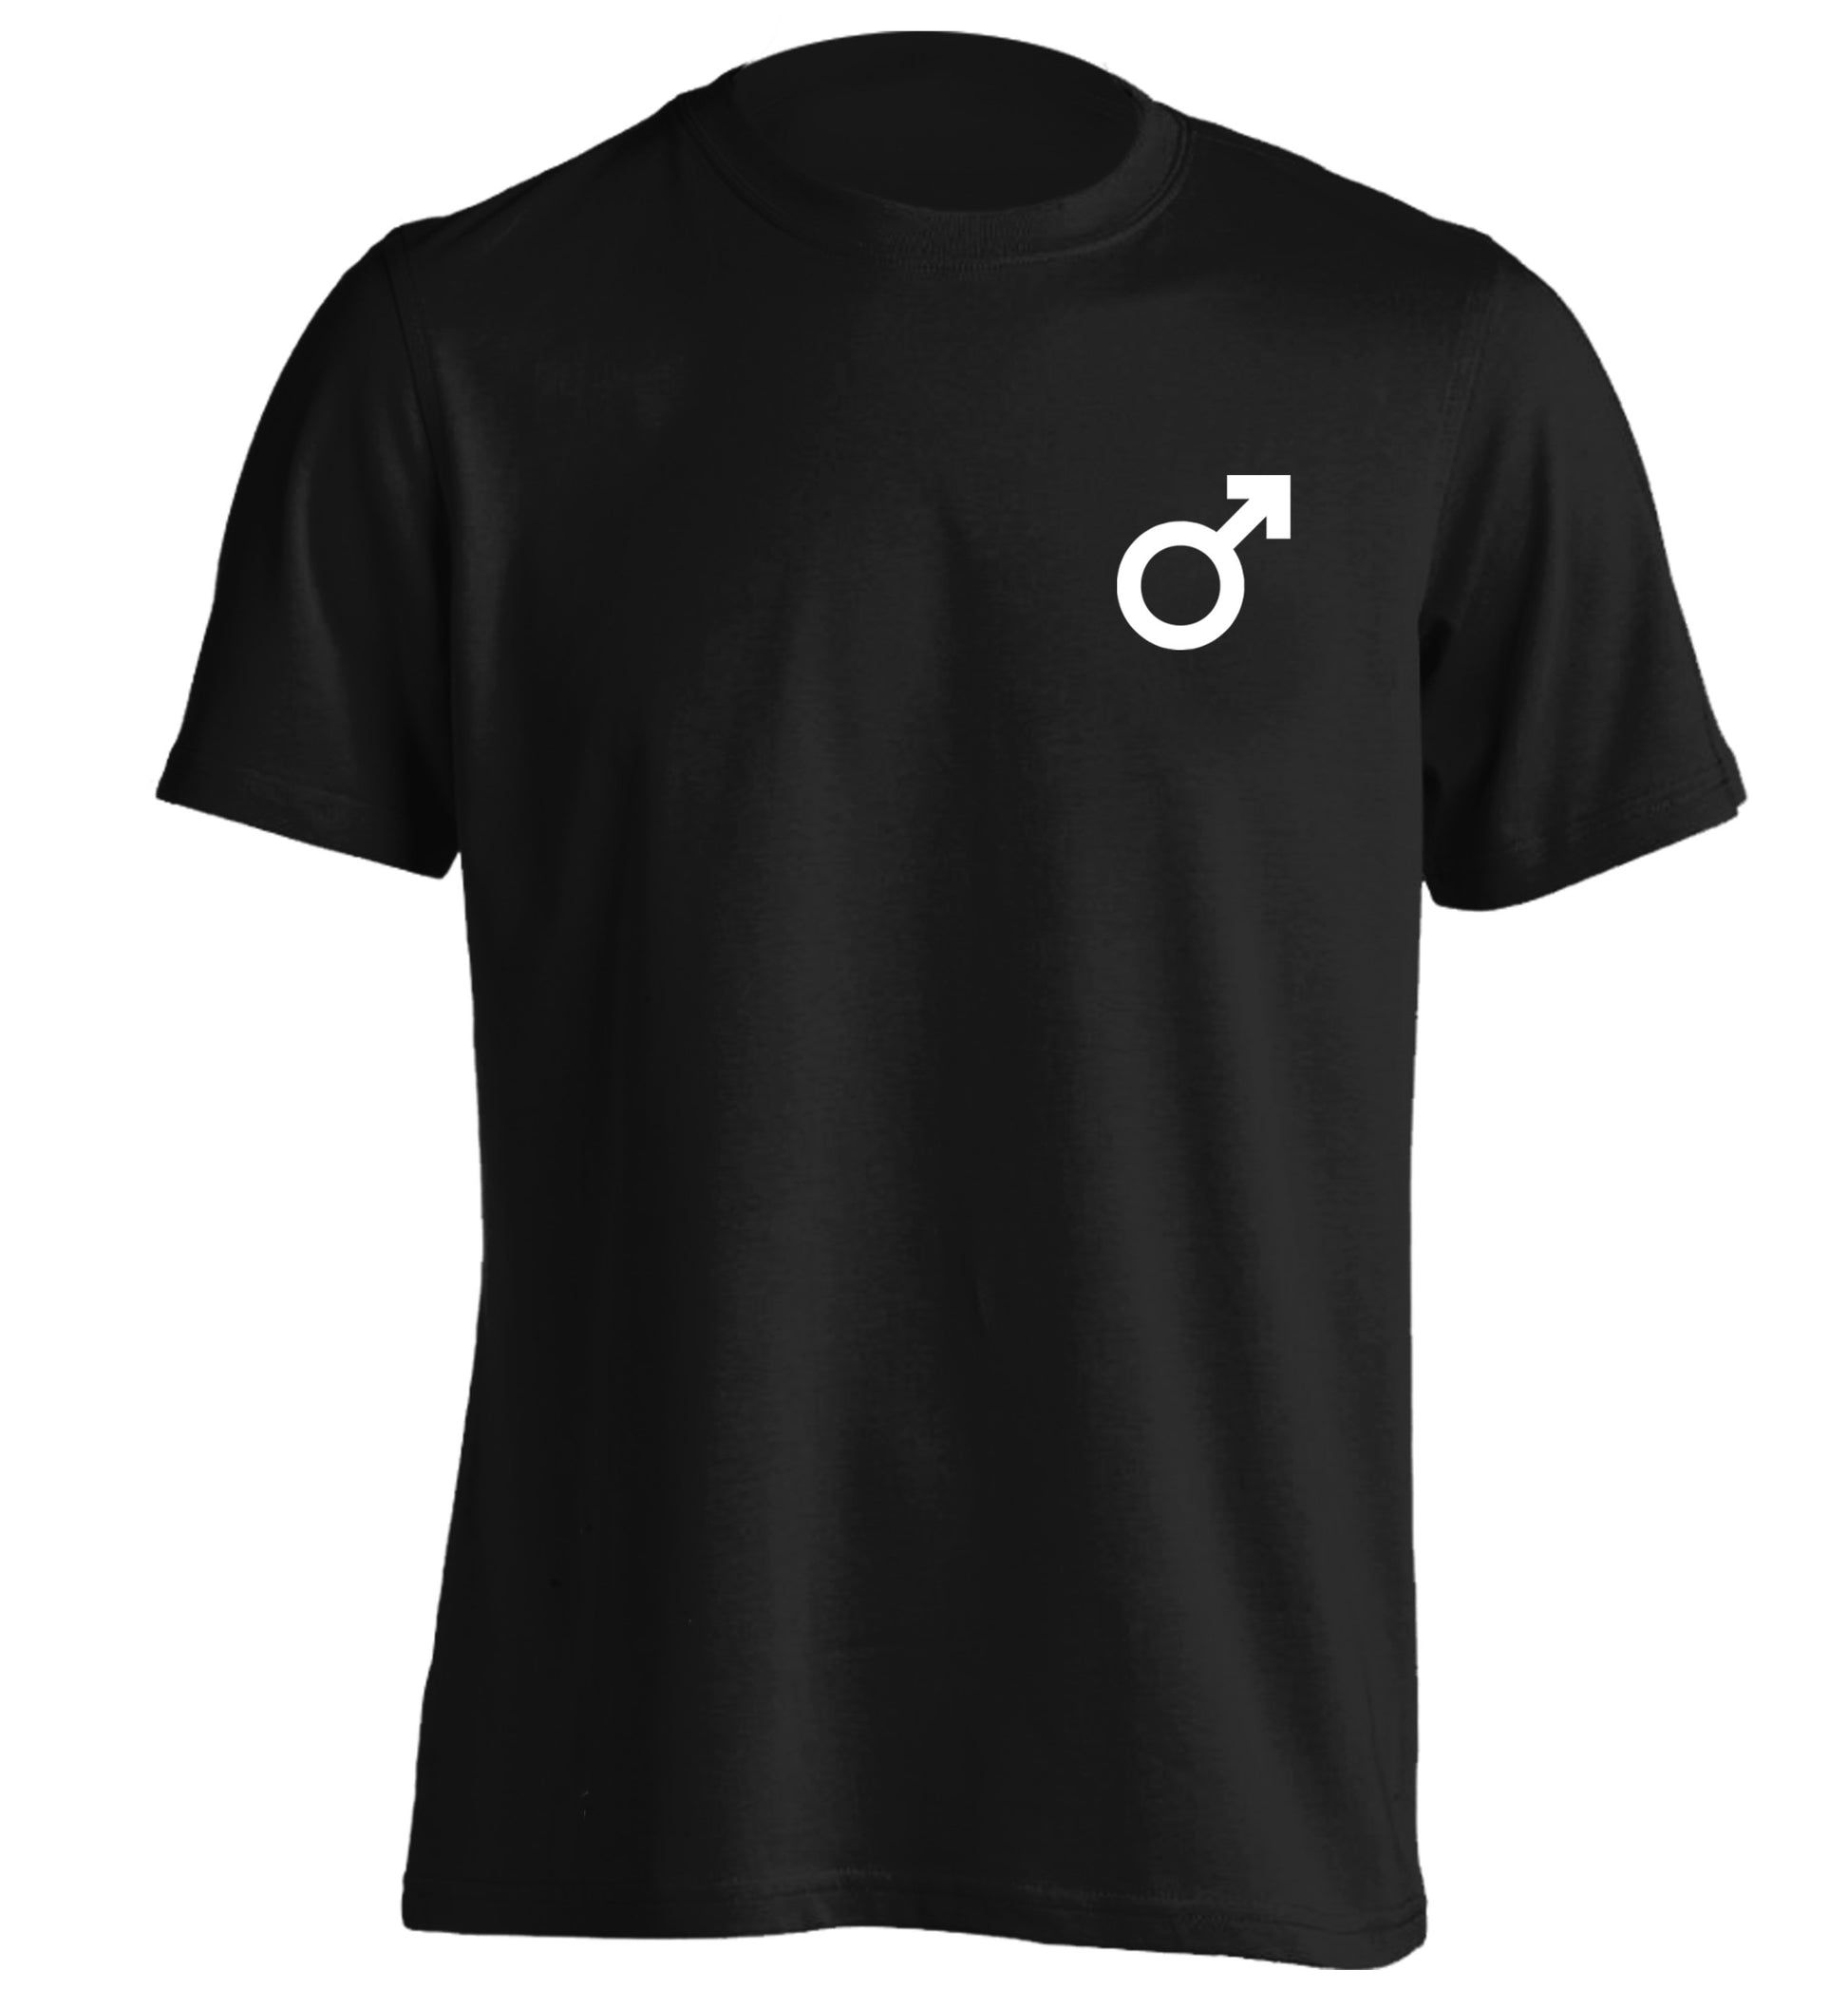 Male symbol pocket adults unisex black Tshirt 2XL